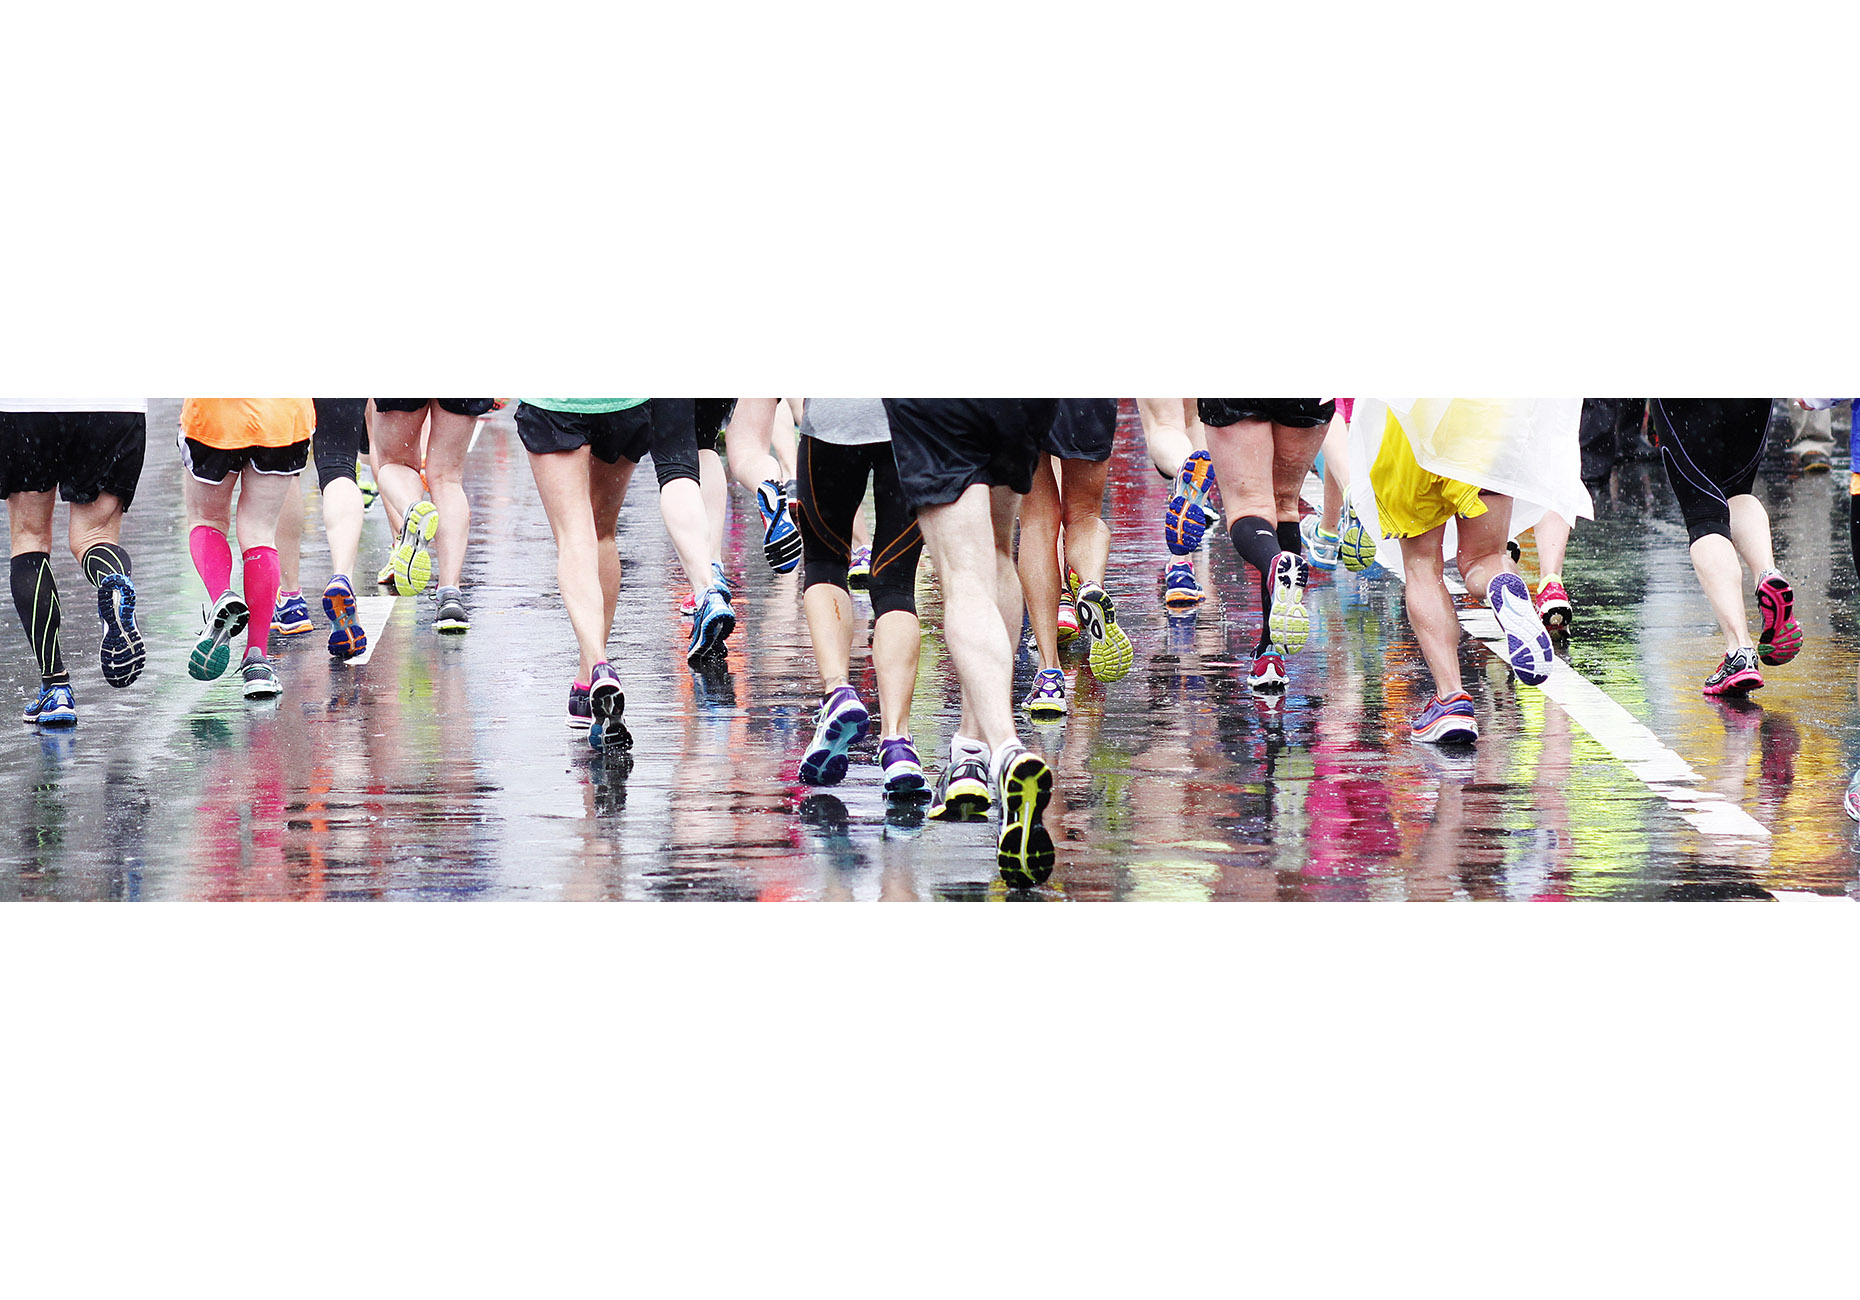 wet marathoners shoes